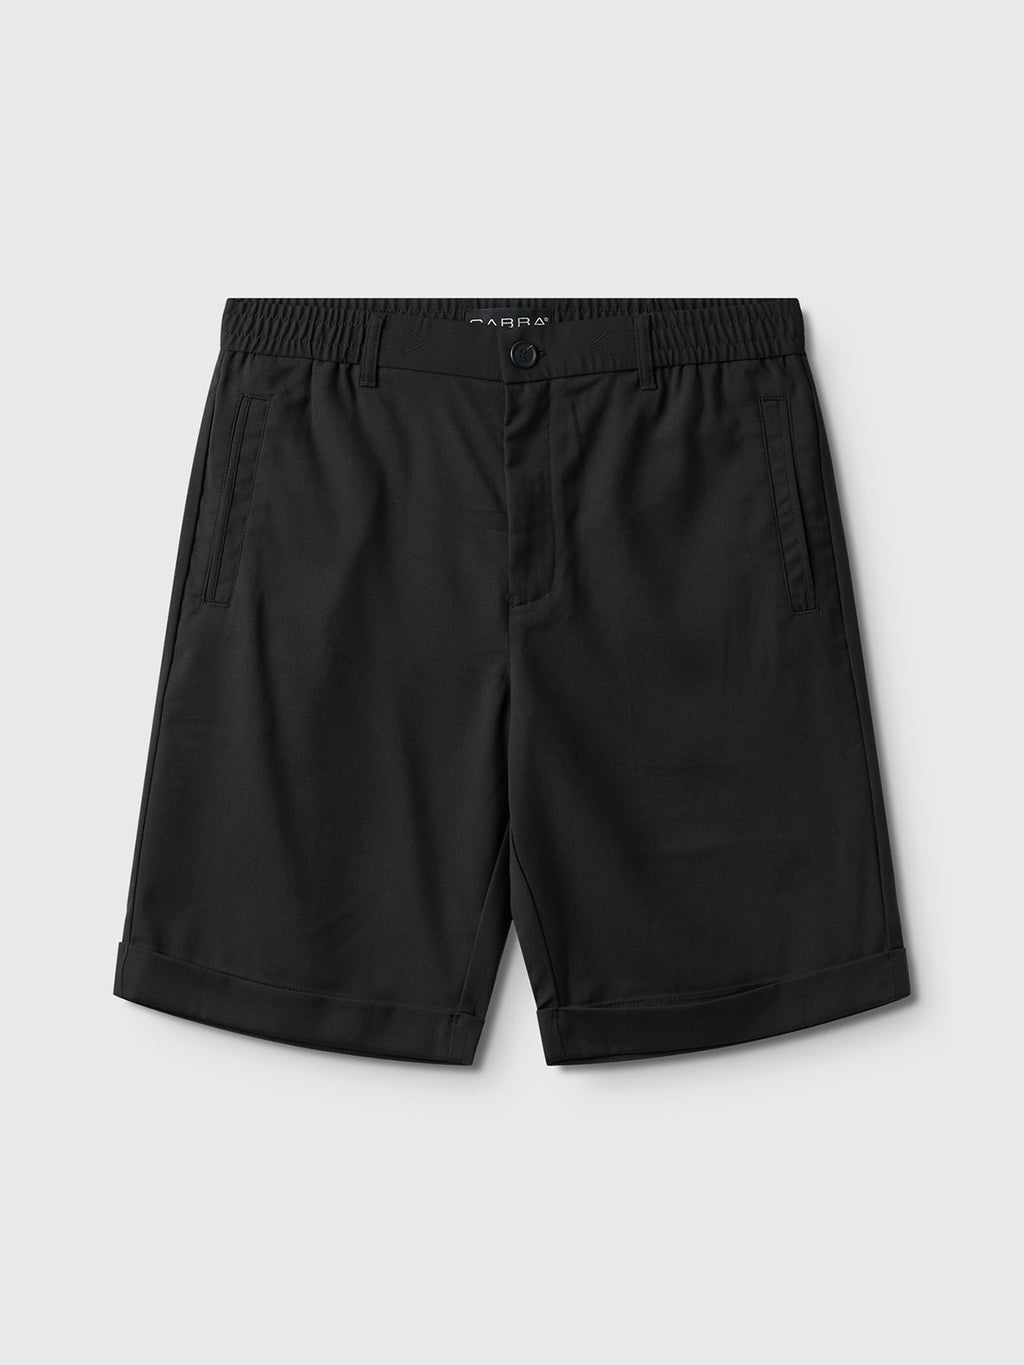 Monza Fin Shorts - Black